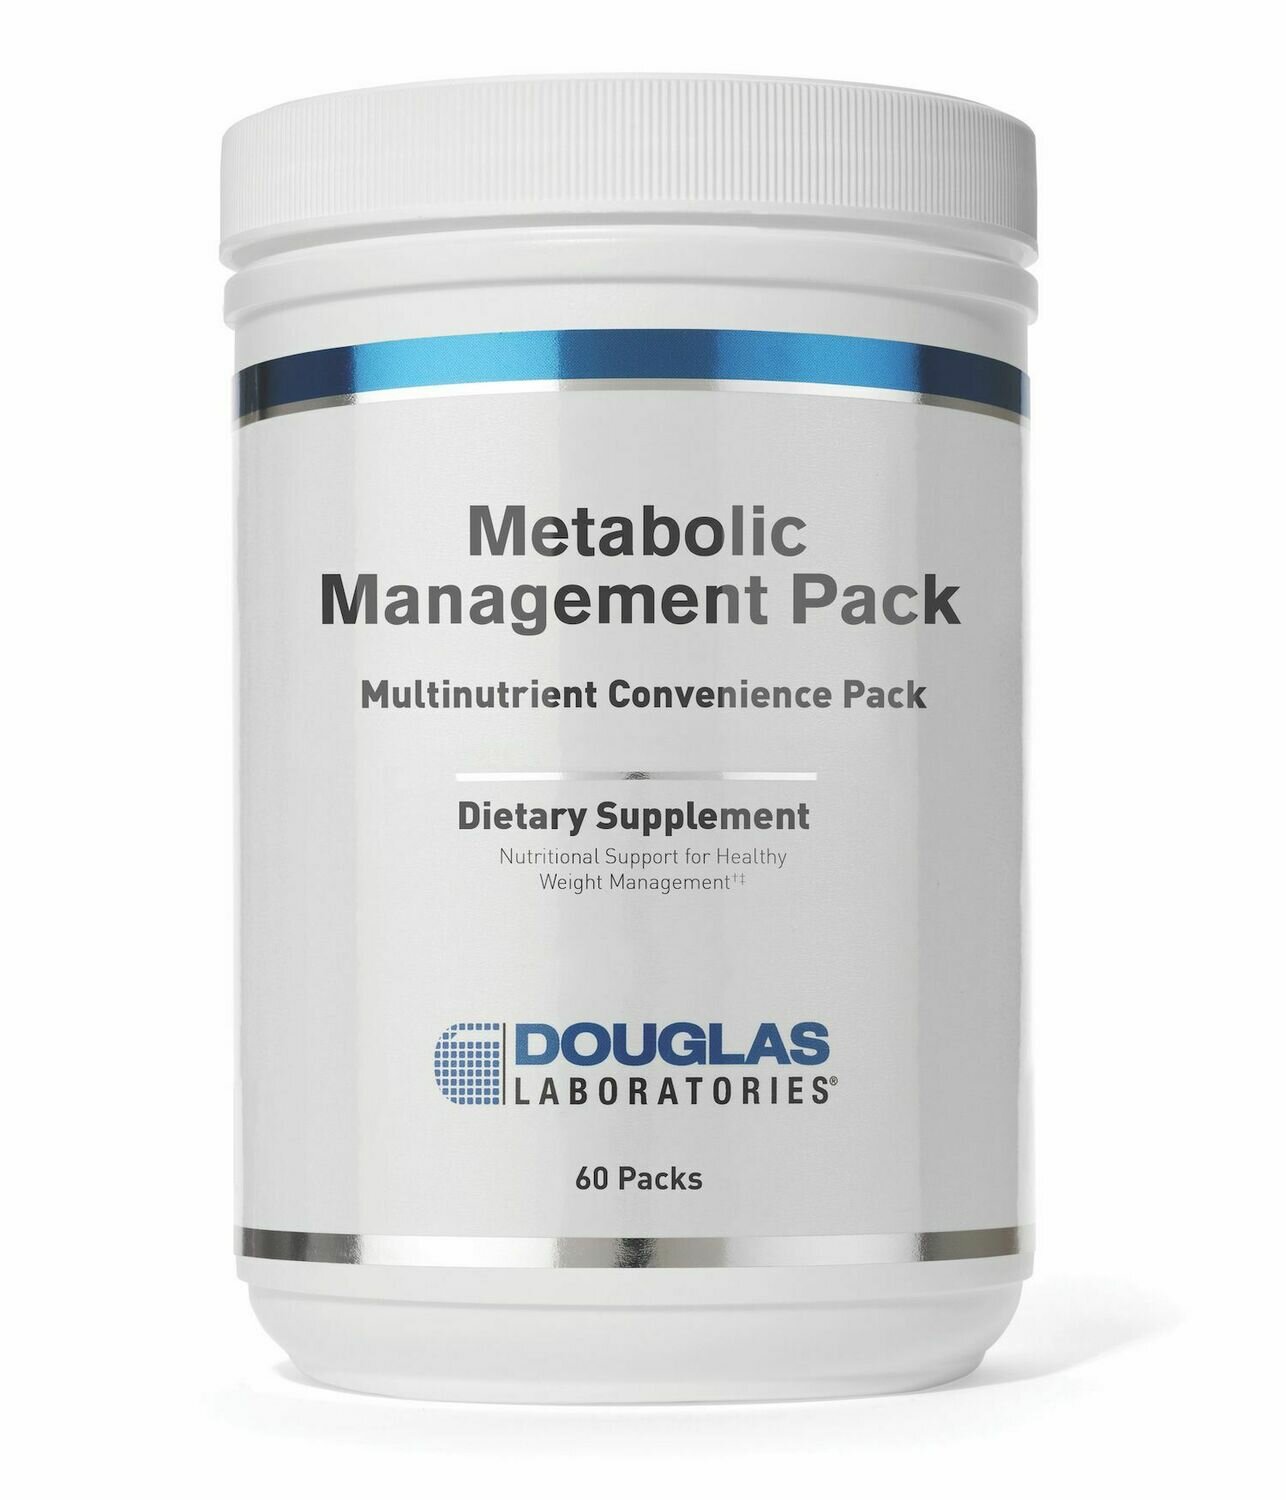 Metabolic Management Pack